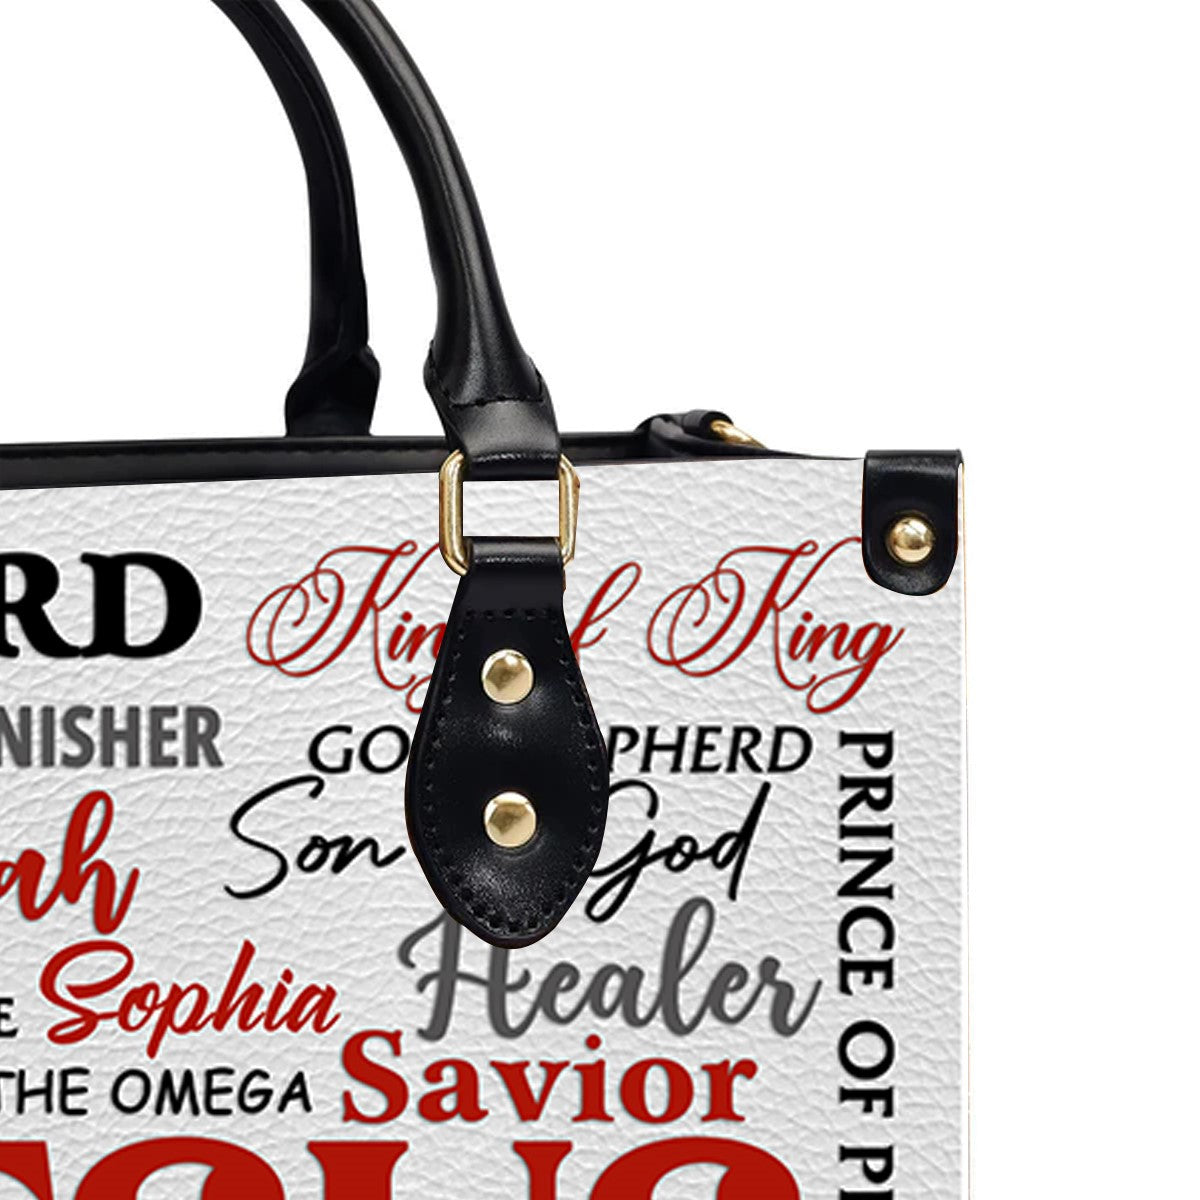 Christianartbag Handbags, Jesus The Lord King Of King Leather Handbag, Vintage hand-woven southwest lacing design Leather Handbag, Gifts for Women, CABLTB03131023. - Christian Art Bag